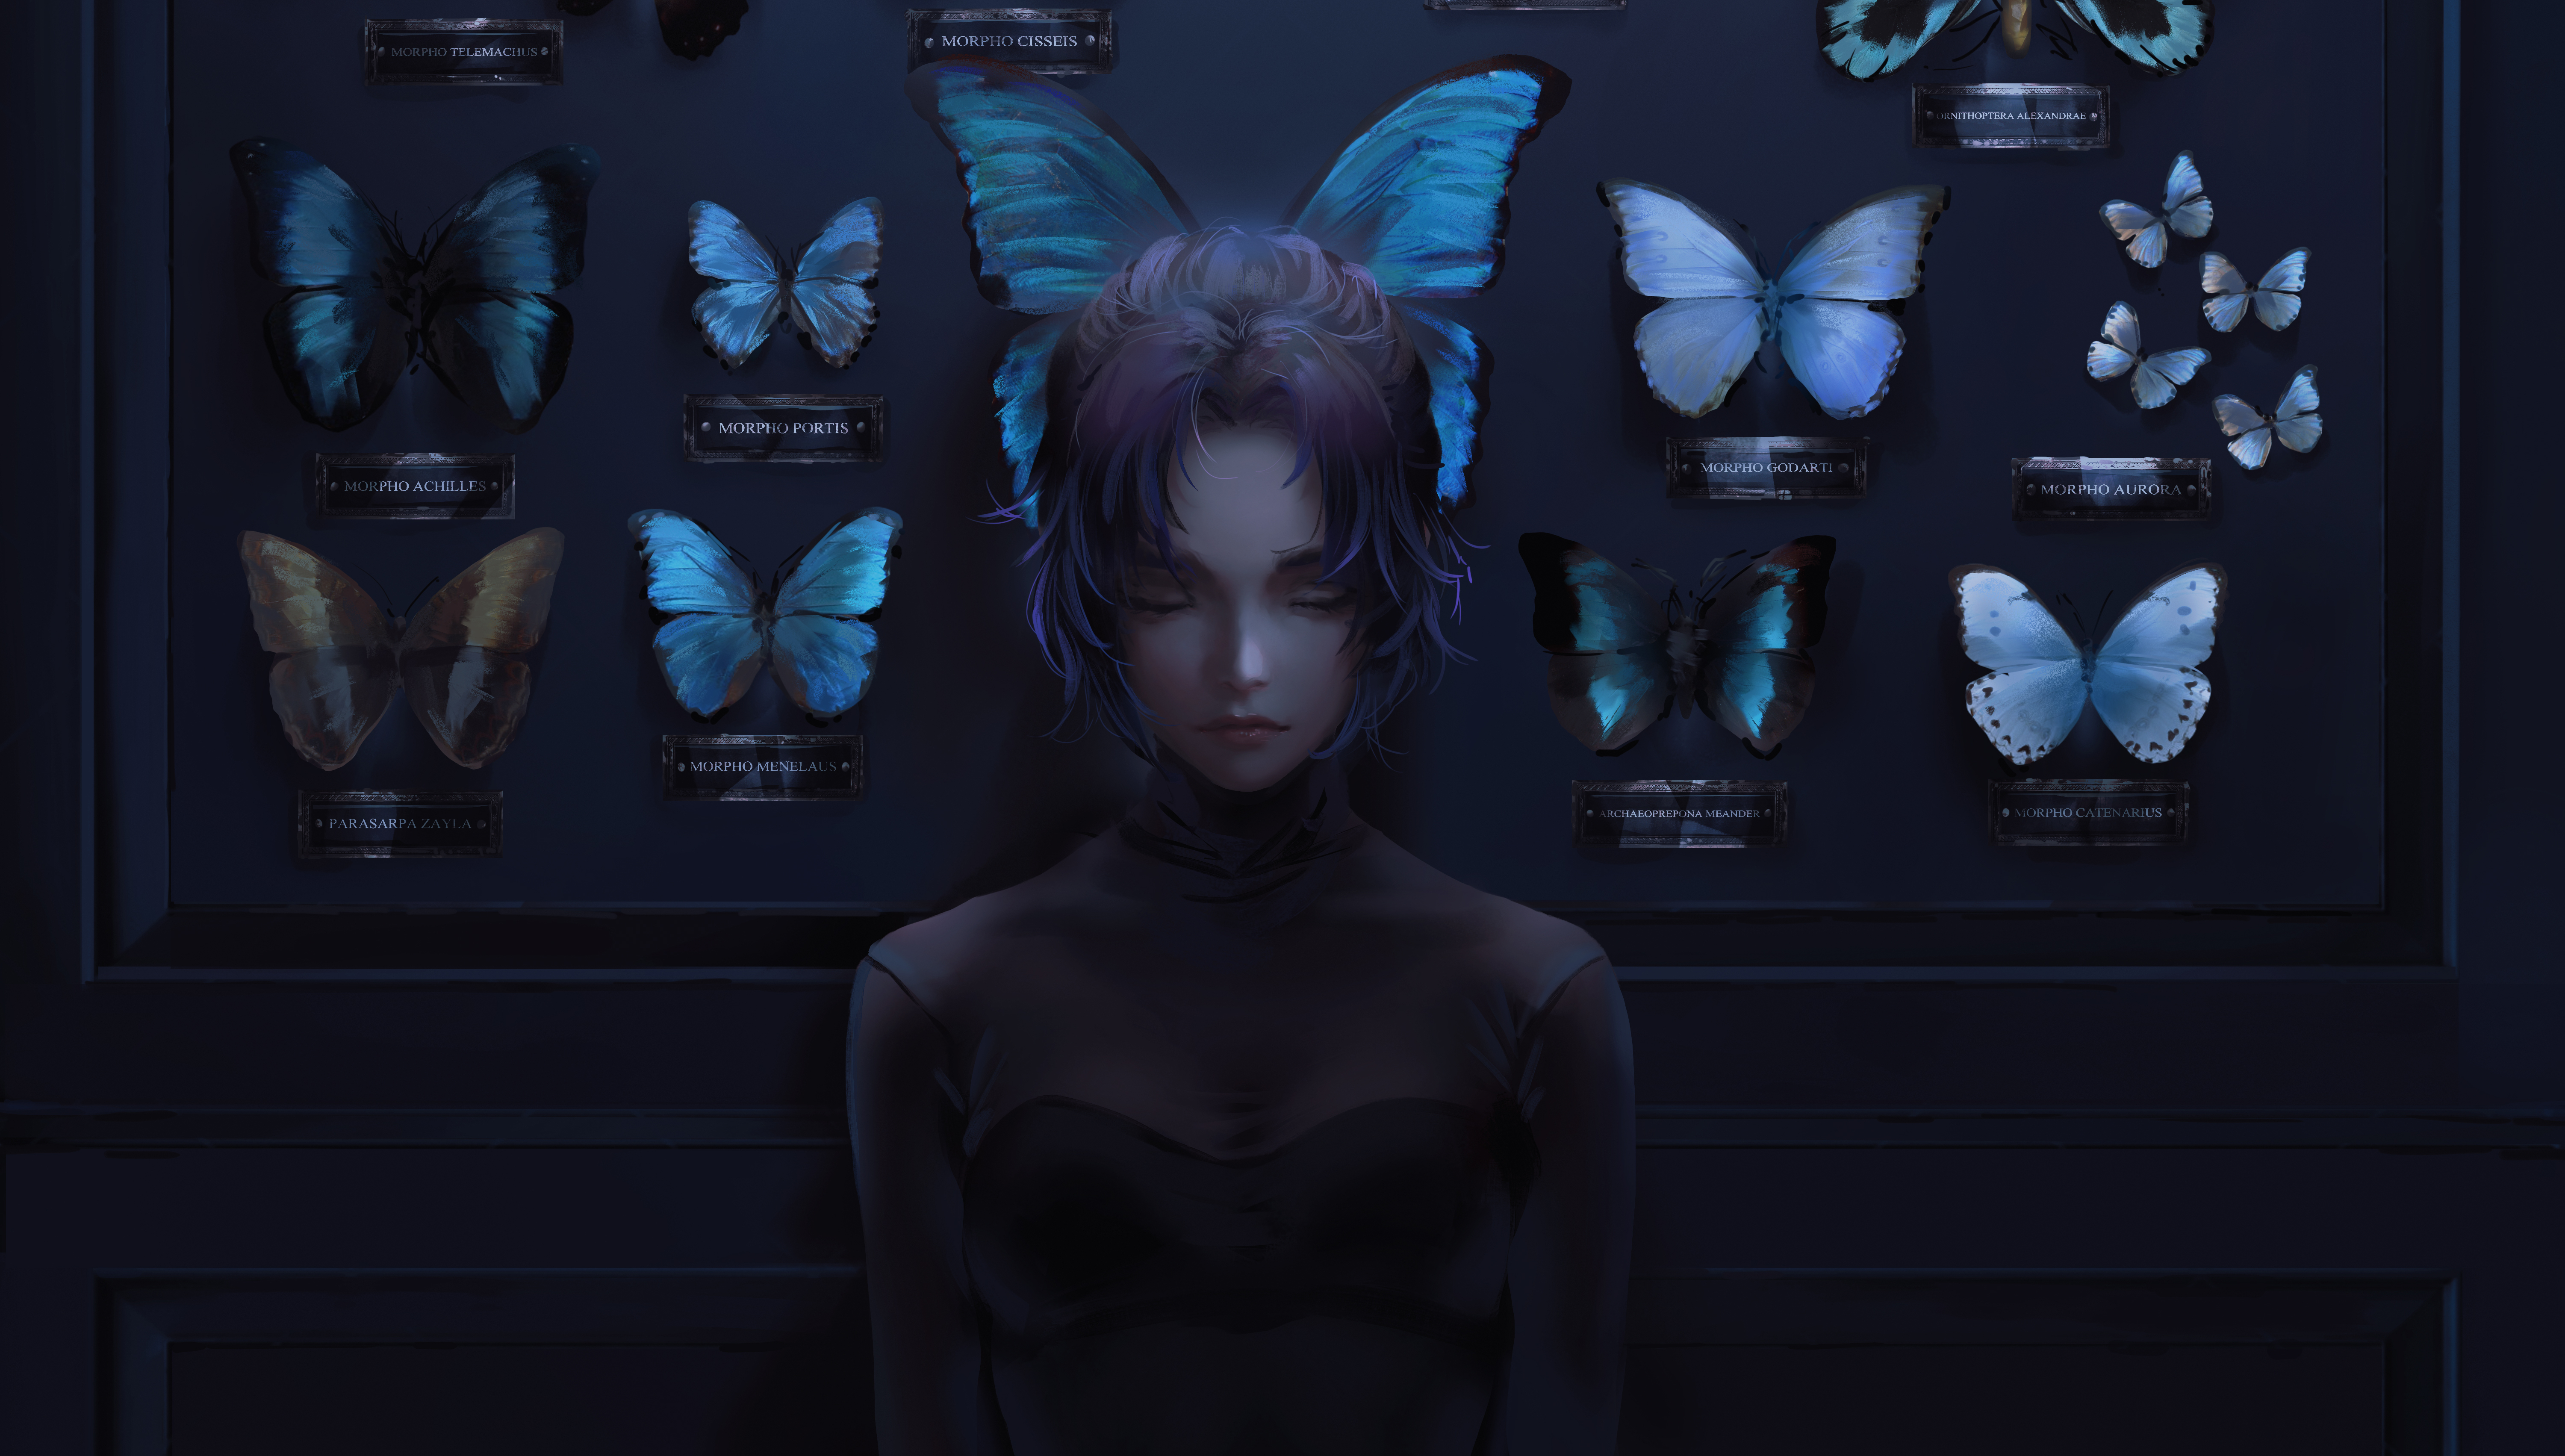 Черная бабочка 2021